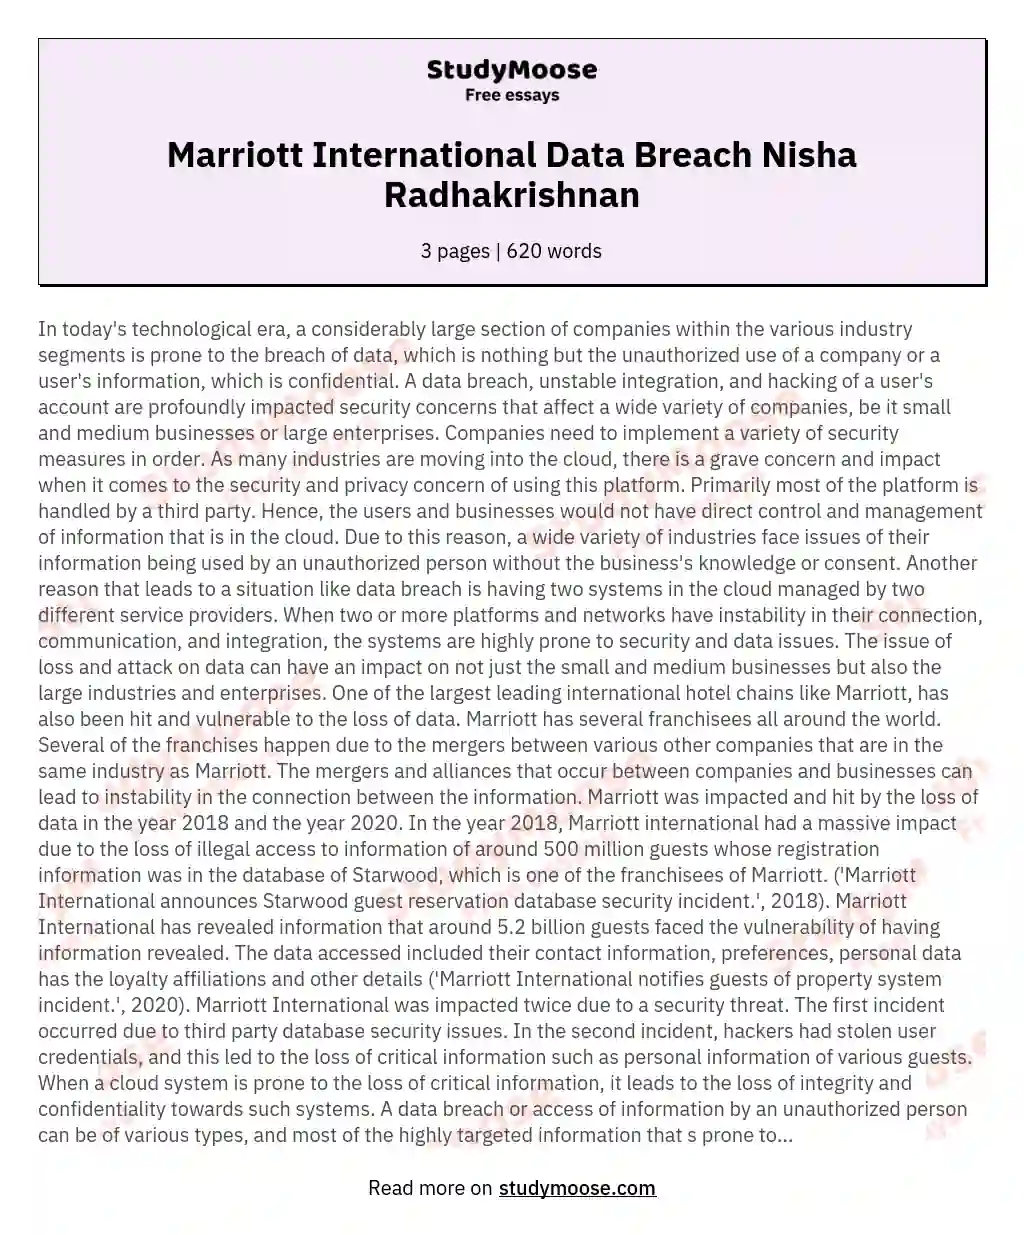 Marriott International Data Breach Nisha Radhakrishnan essay